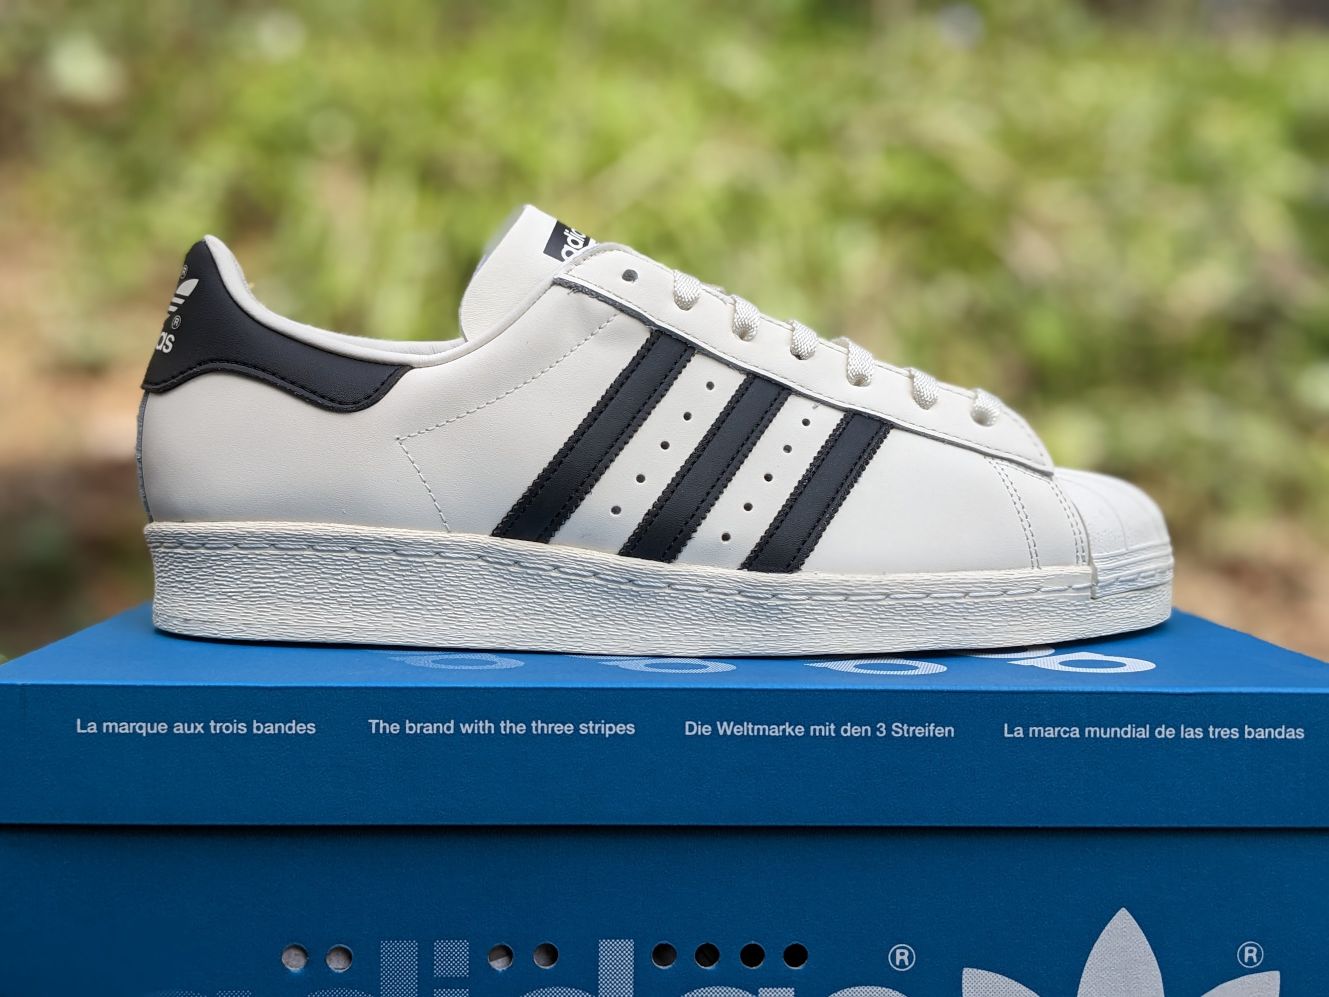 Adidas Superstar 82: A Near-Perfect Retro